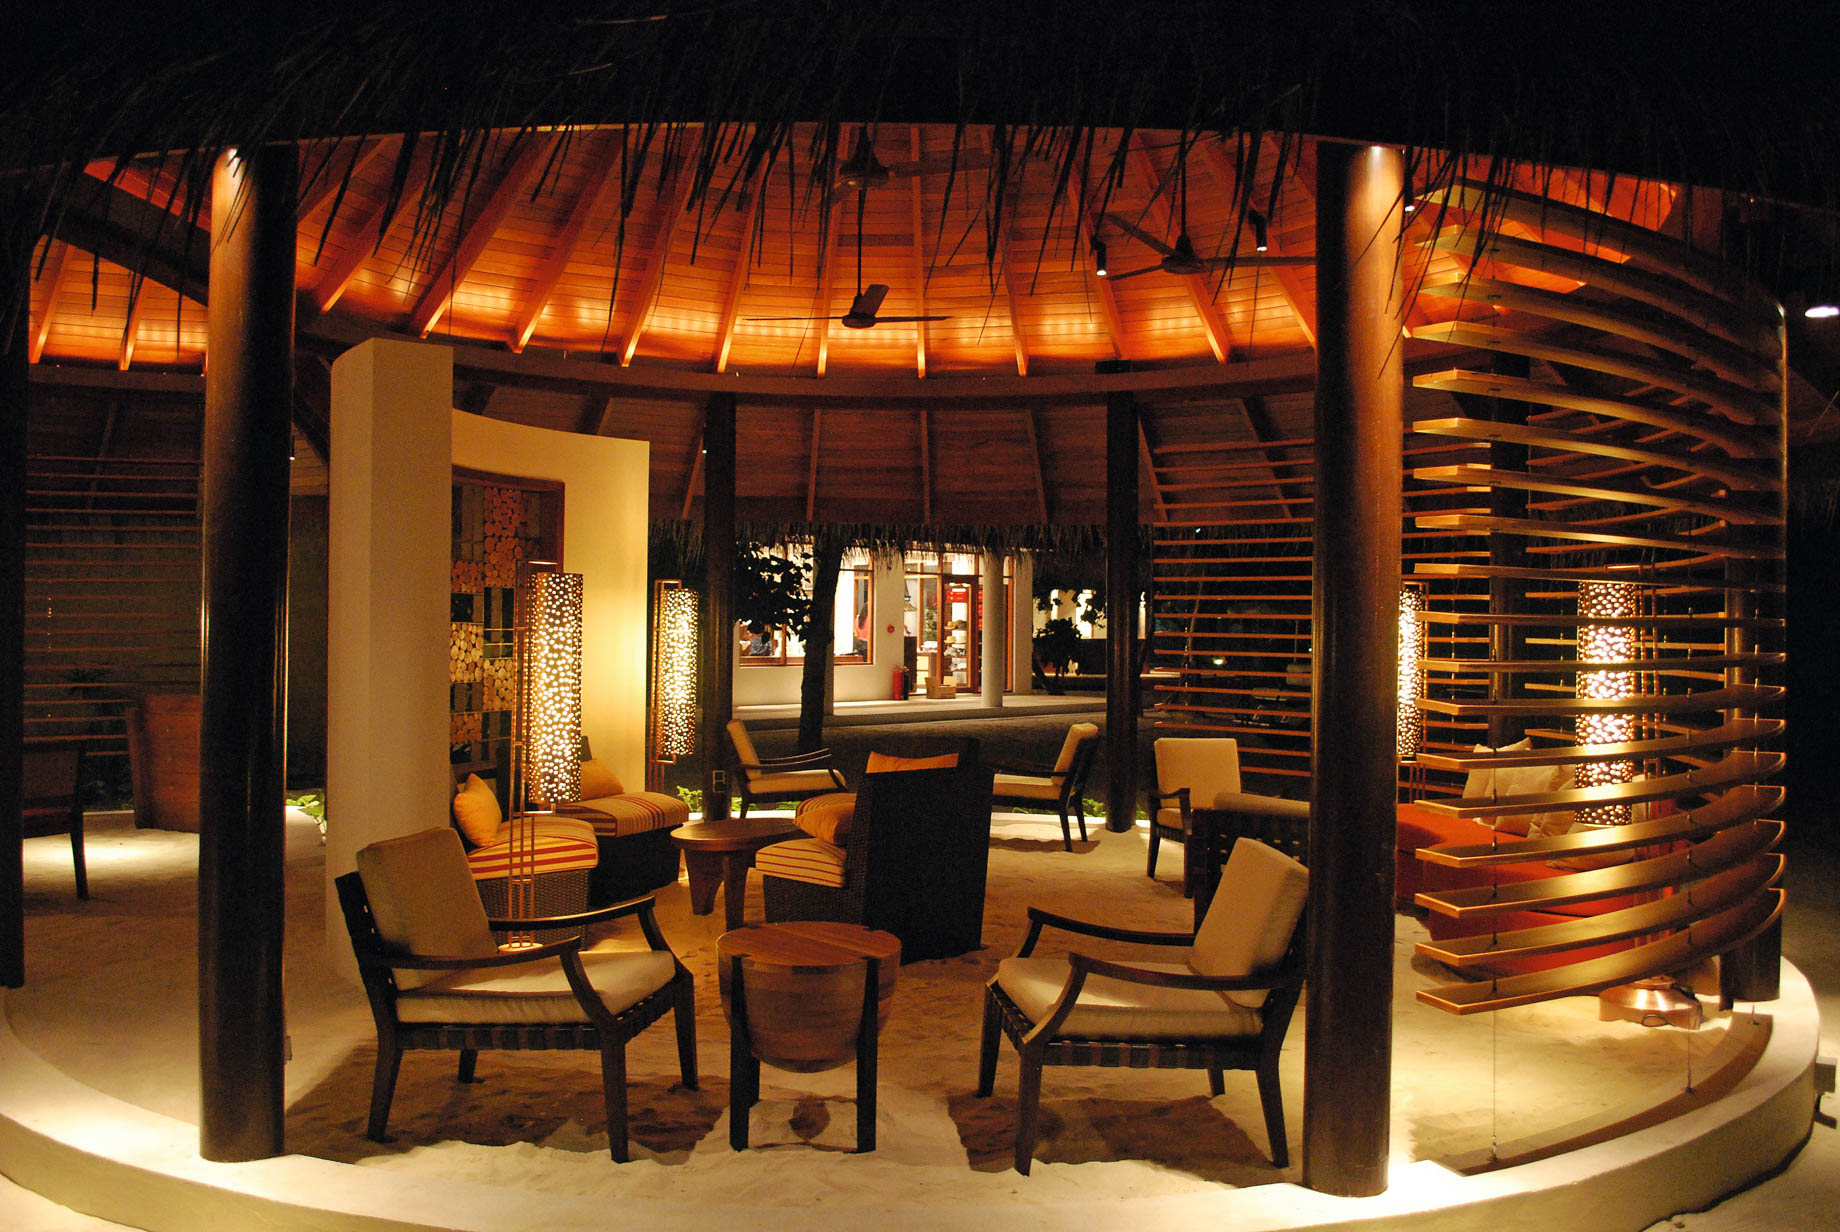 Constance Halaveli Resort – North Ari Atoll, Maldives – Jahaz Restaurant